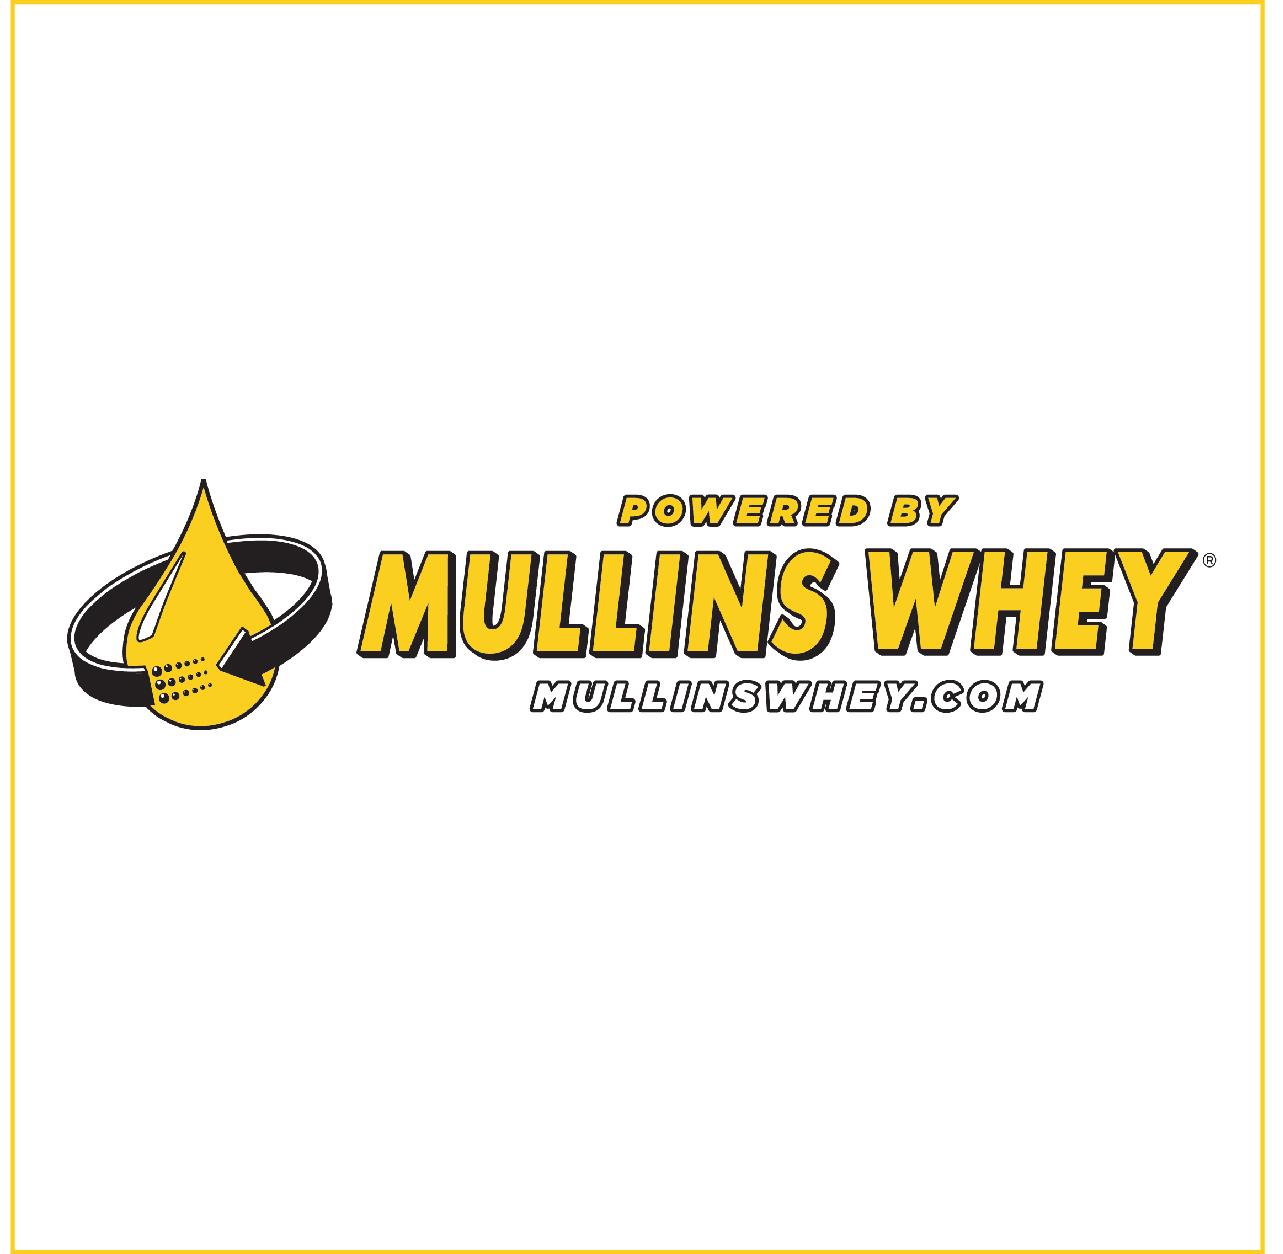 Mullins Whey